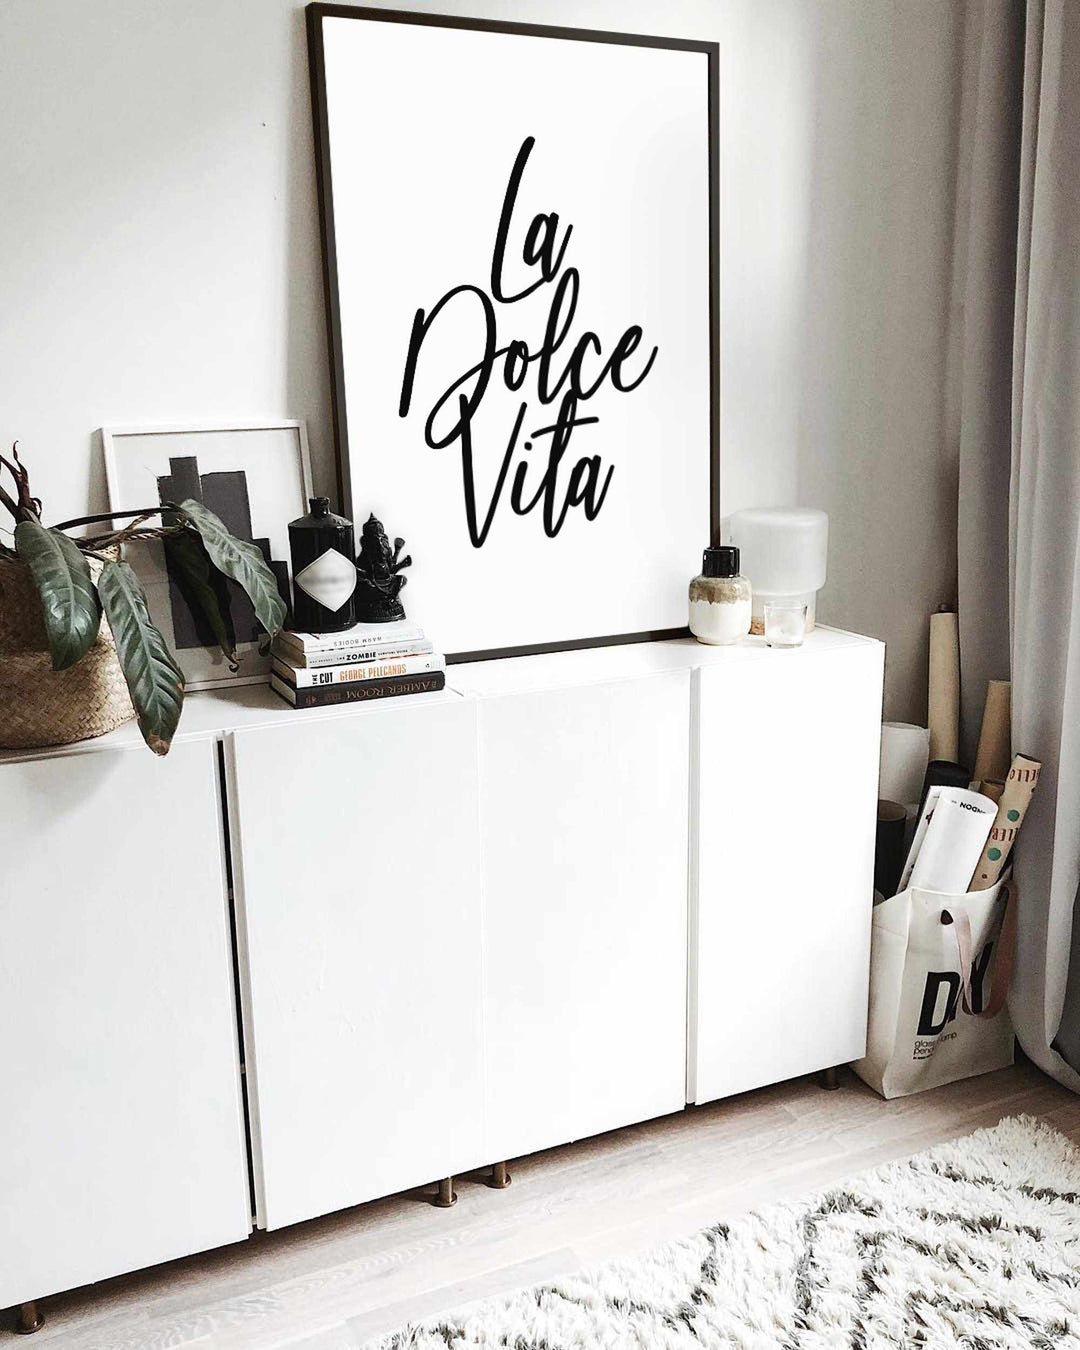 Typographic Wall Art Print 'La Dolce Vita'